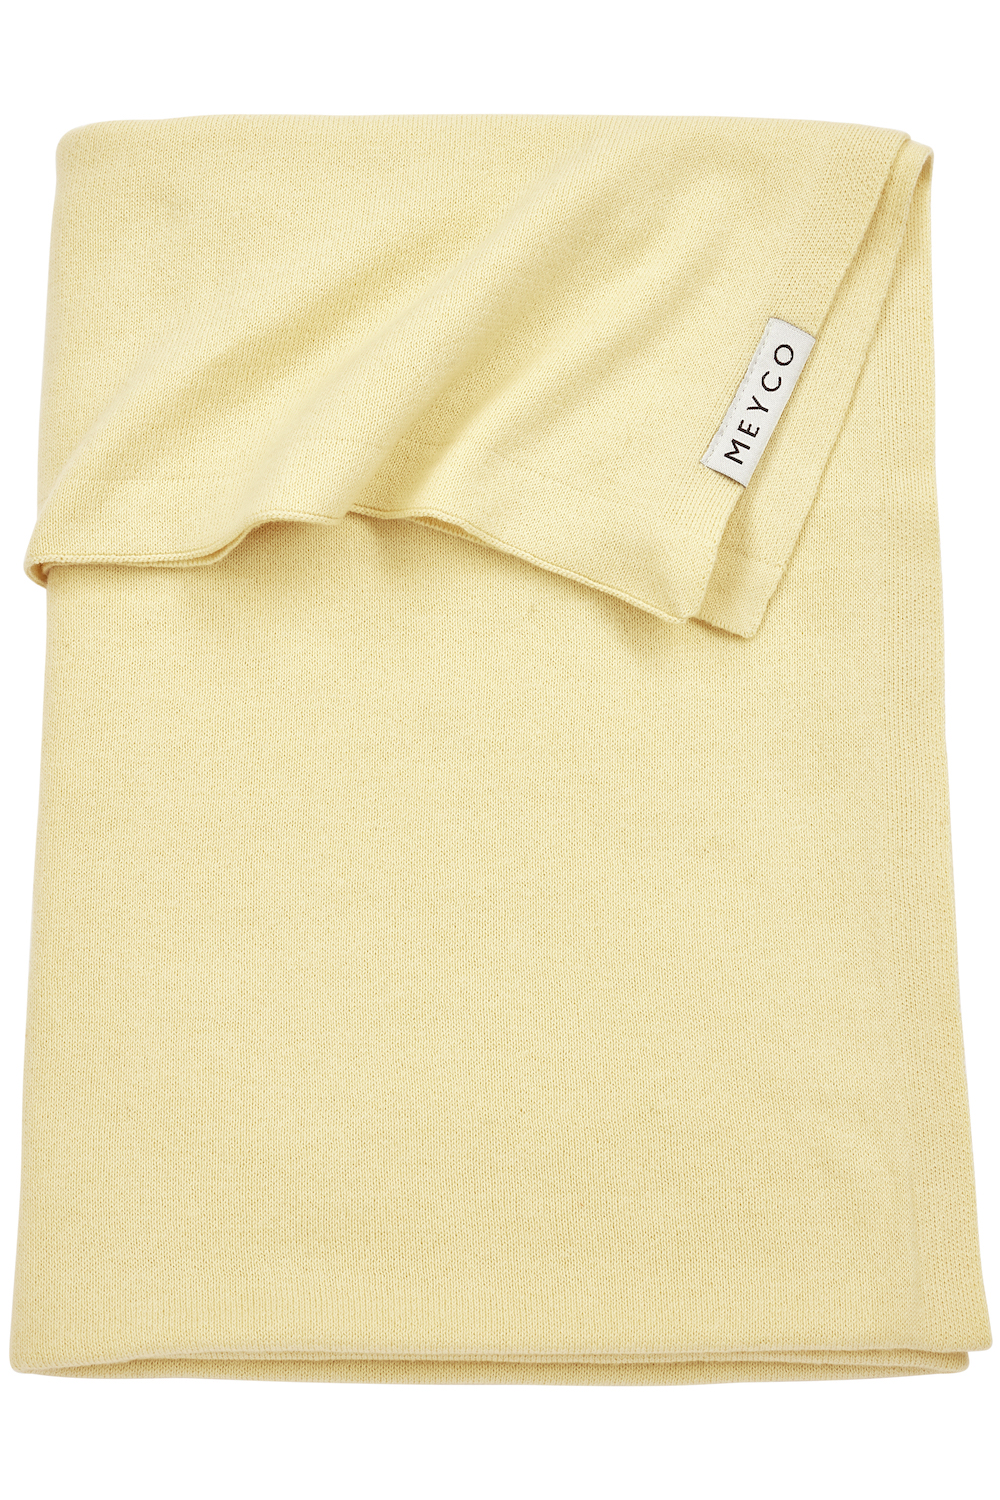 Ledikant deken Knit Basic - soft yellow - 100x150cm